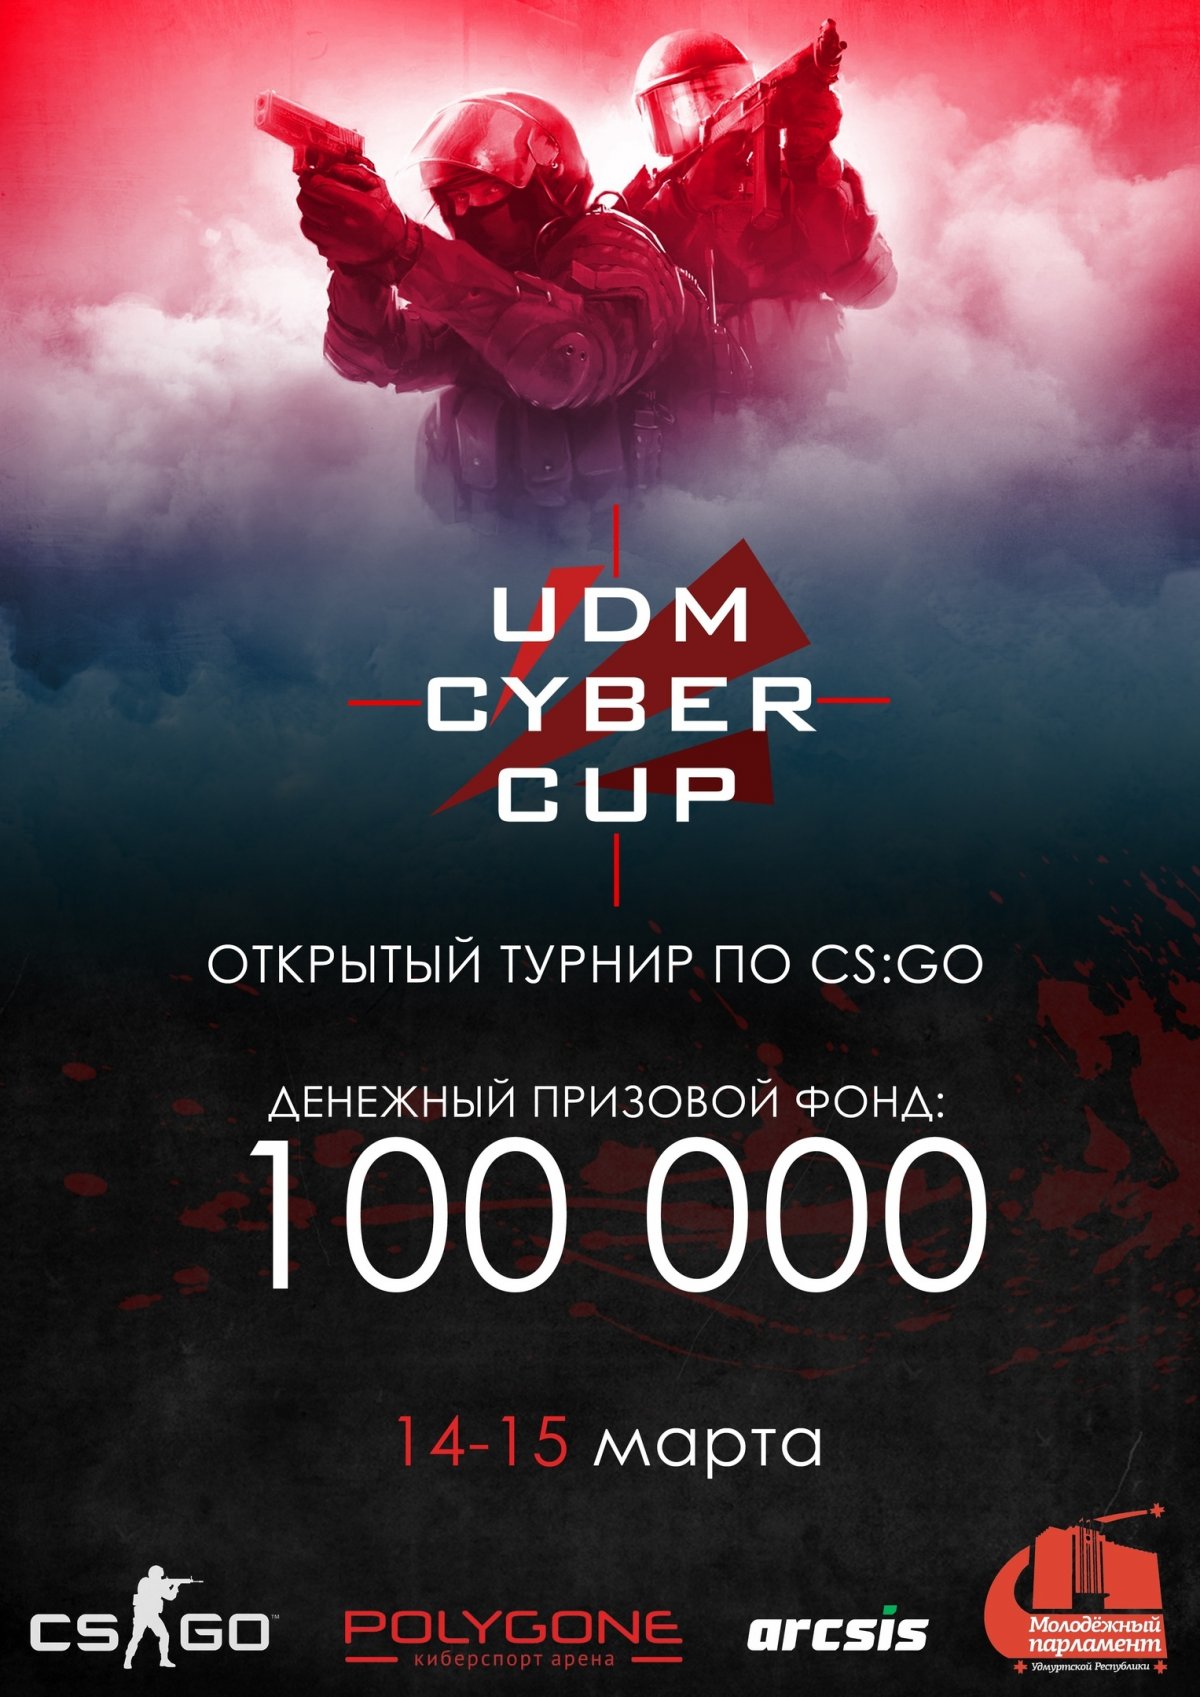 Открытый турнир по Counter-strike: Global offensive “UdmCyberCup”